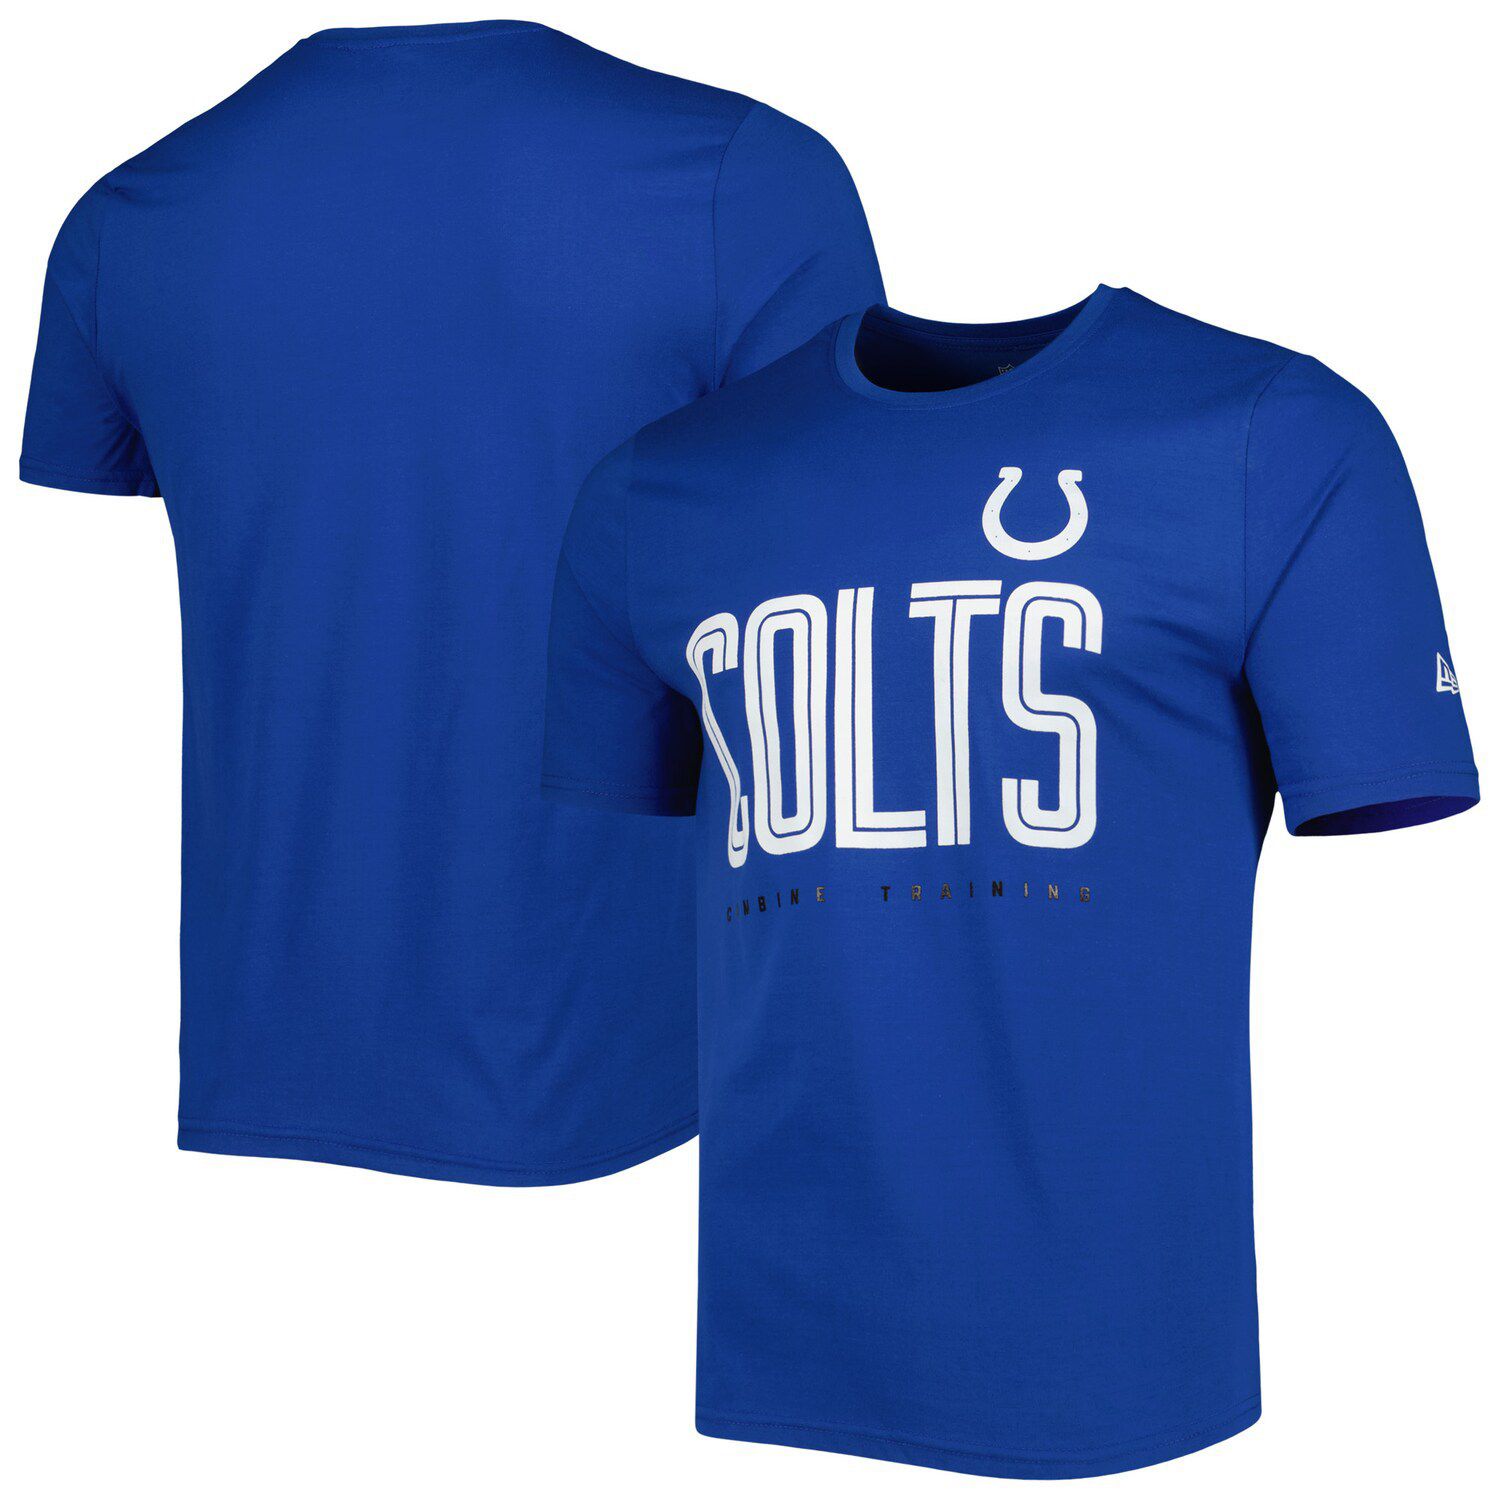 Buffalo Bills Nike Muscle T-Shirt - Royal